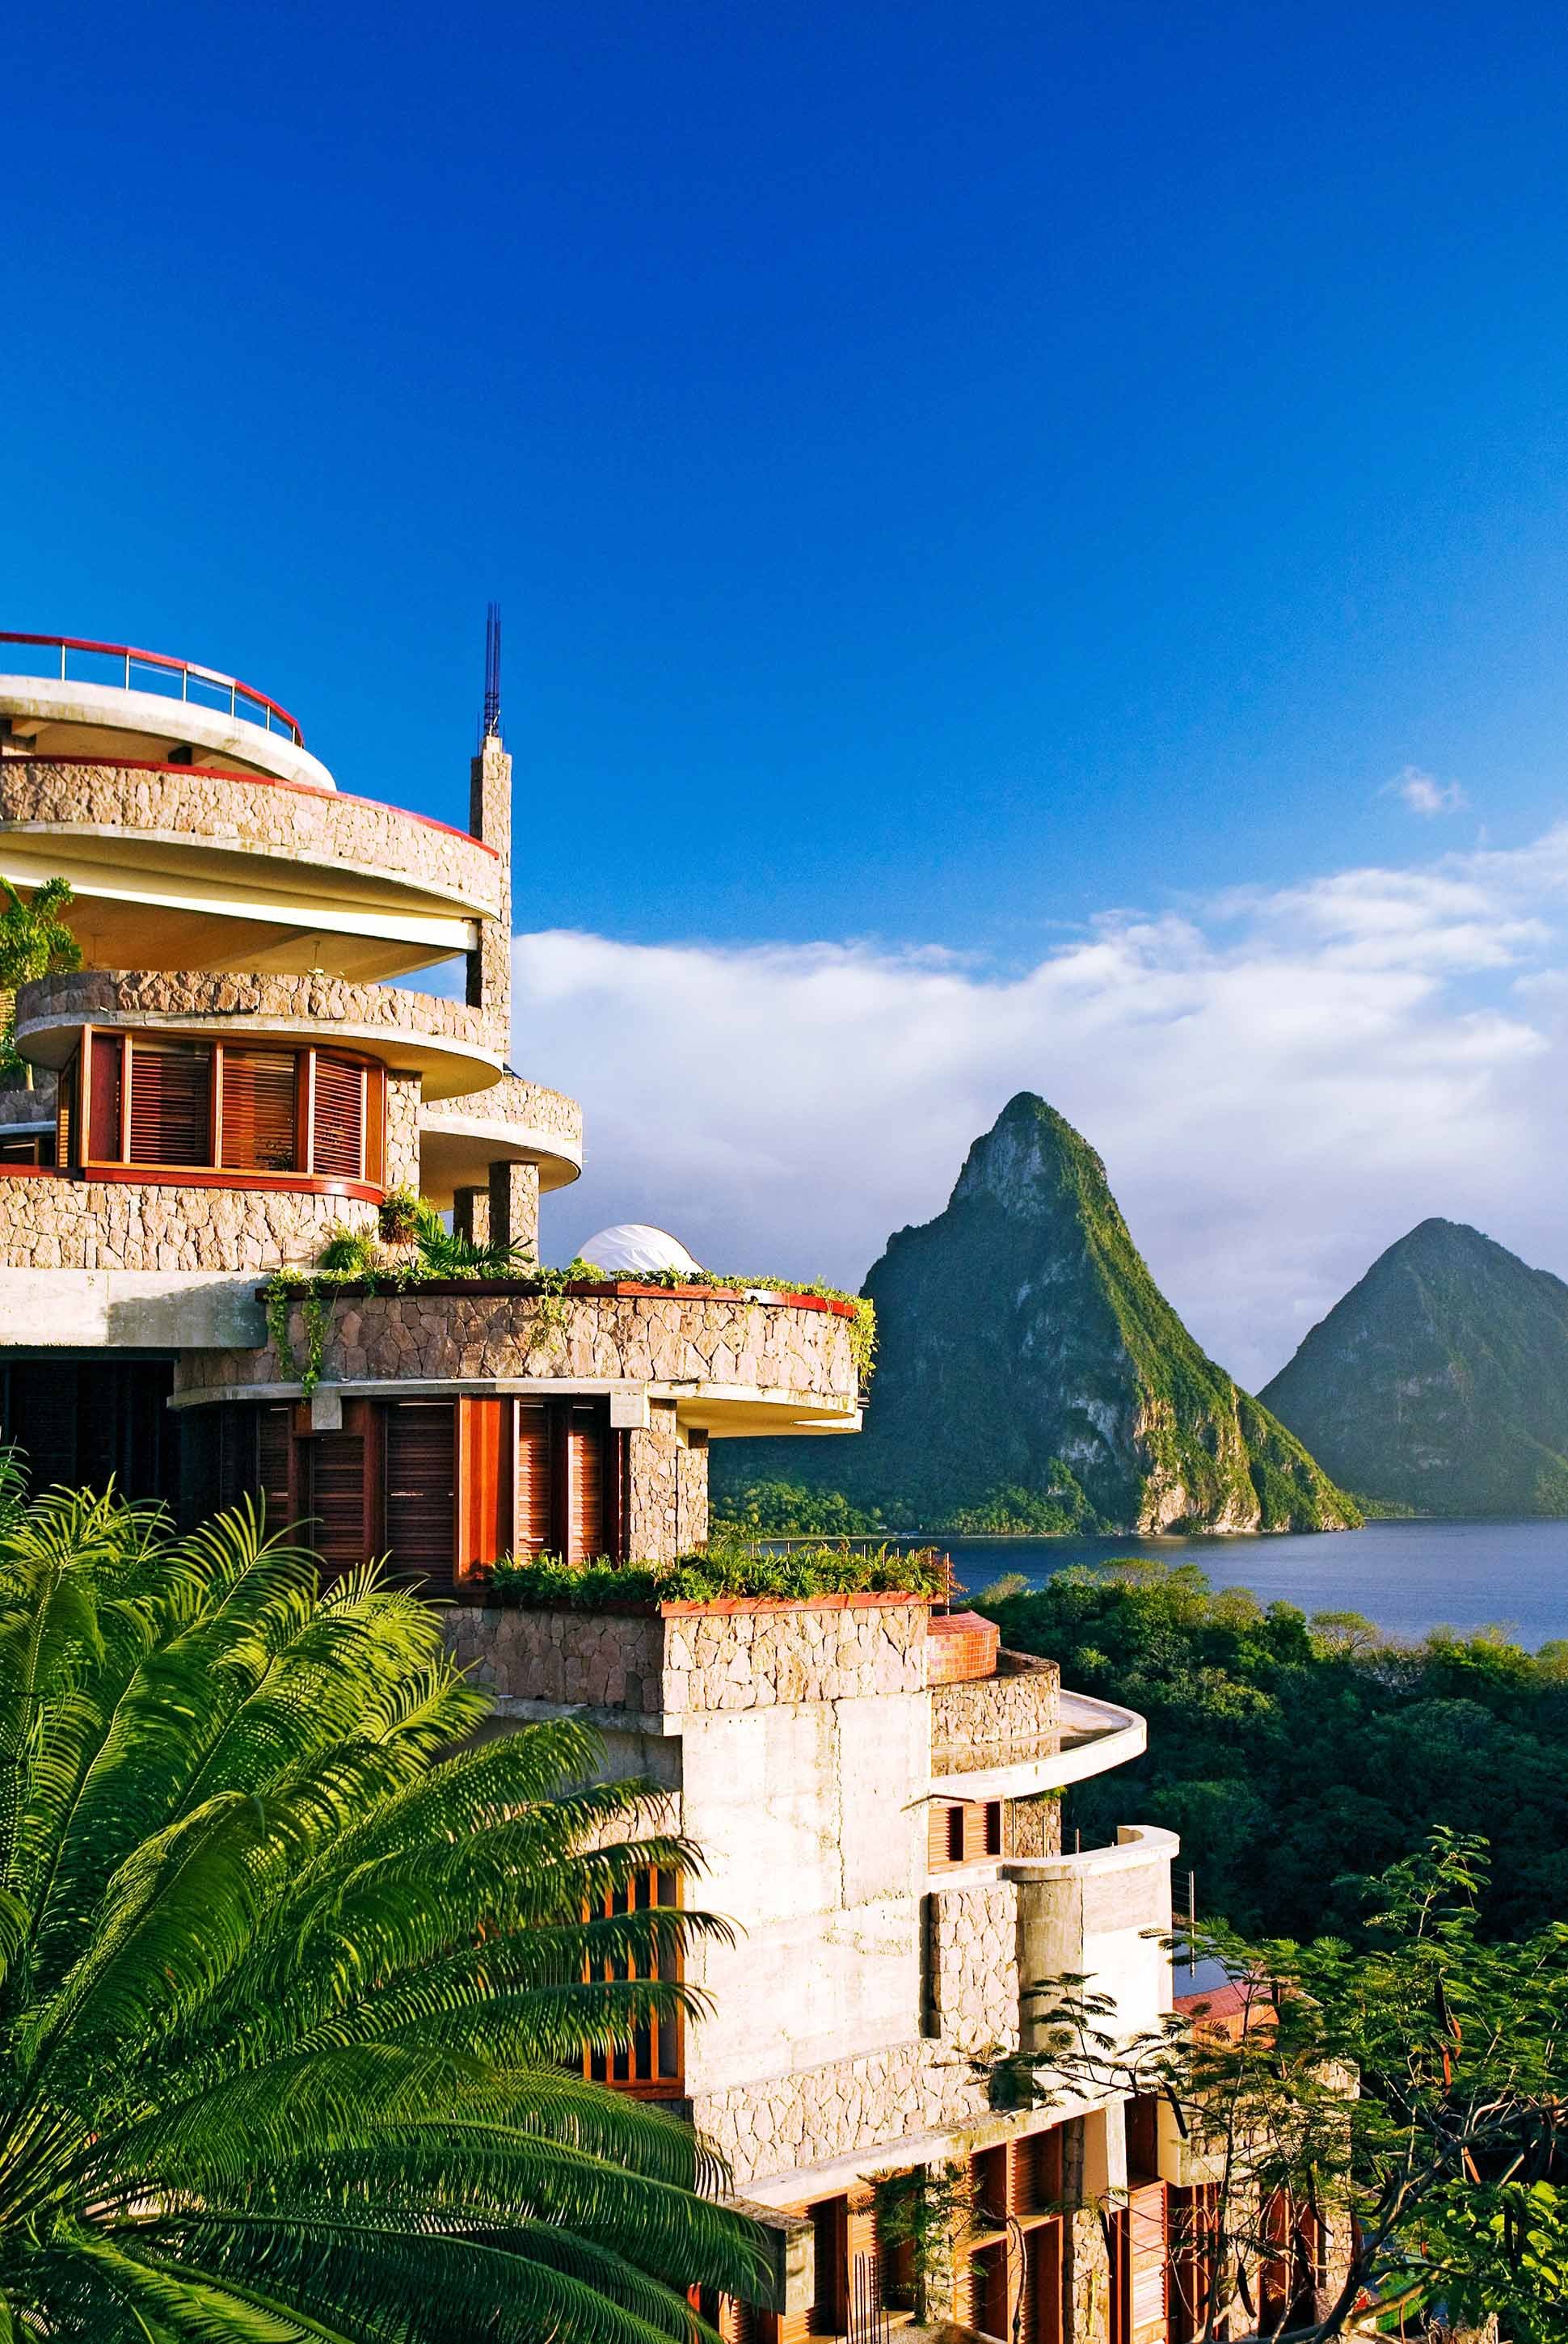 Luxury Hotel Jade Mountain resort 5 stars St Lucia caribbean island hotel view